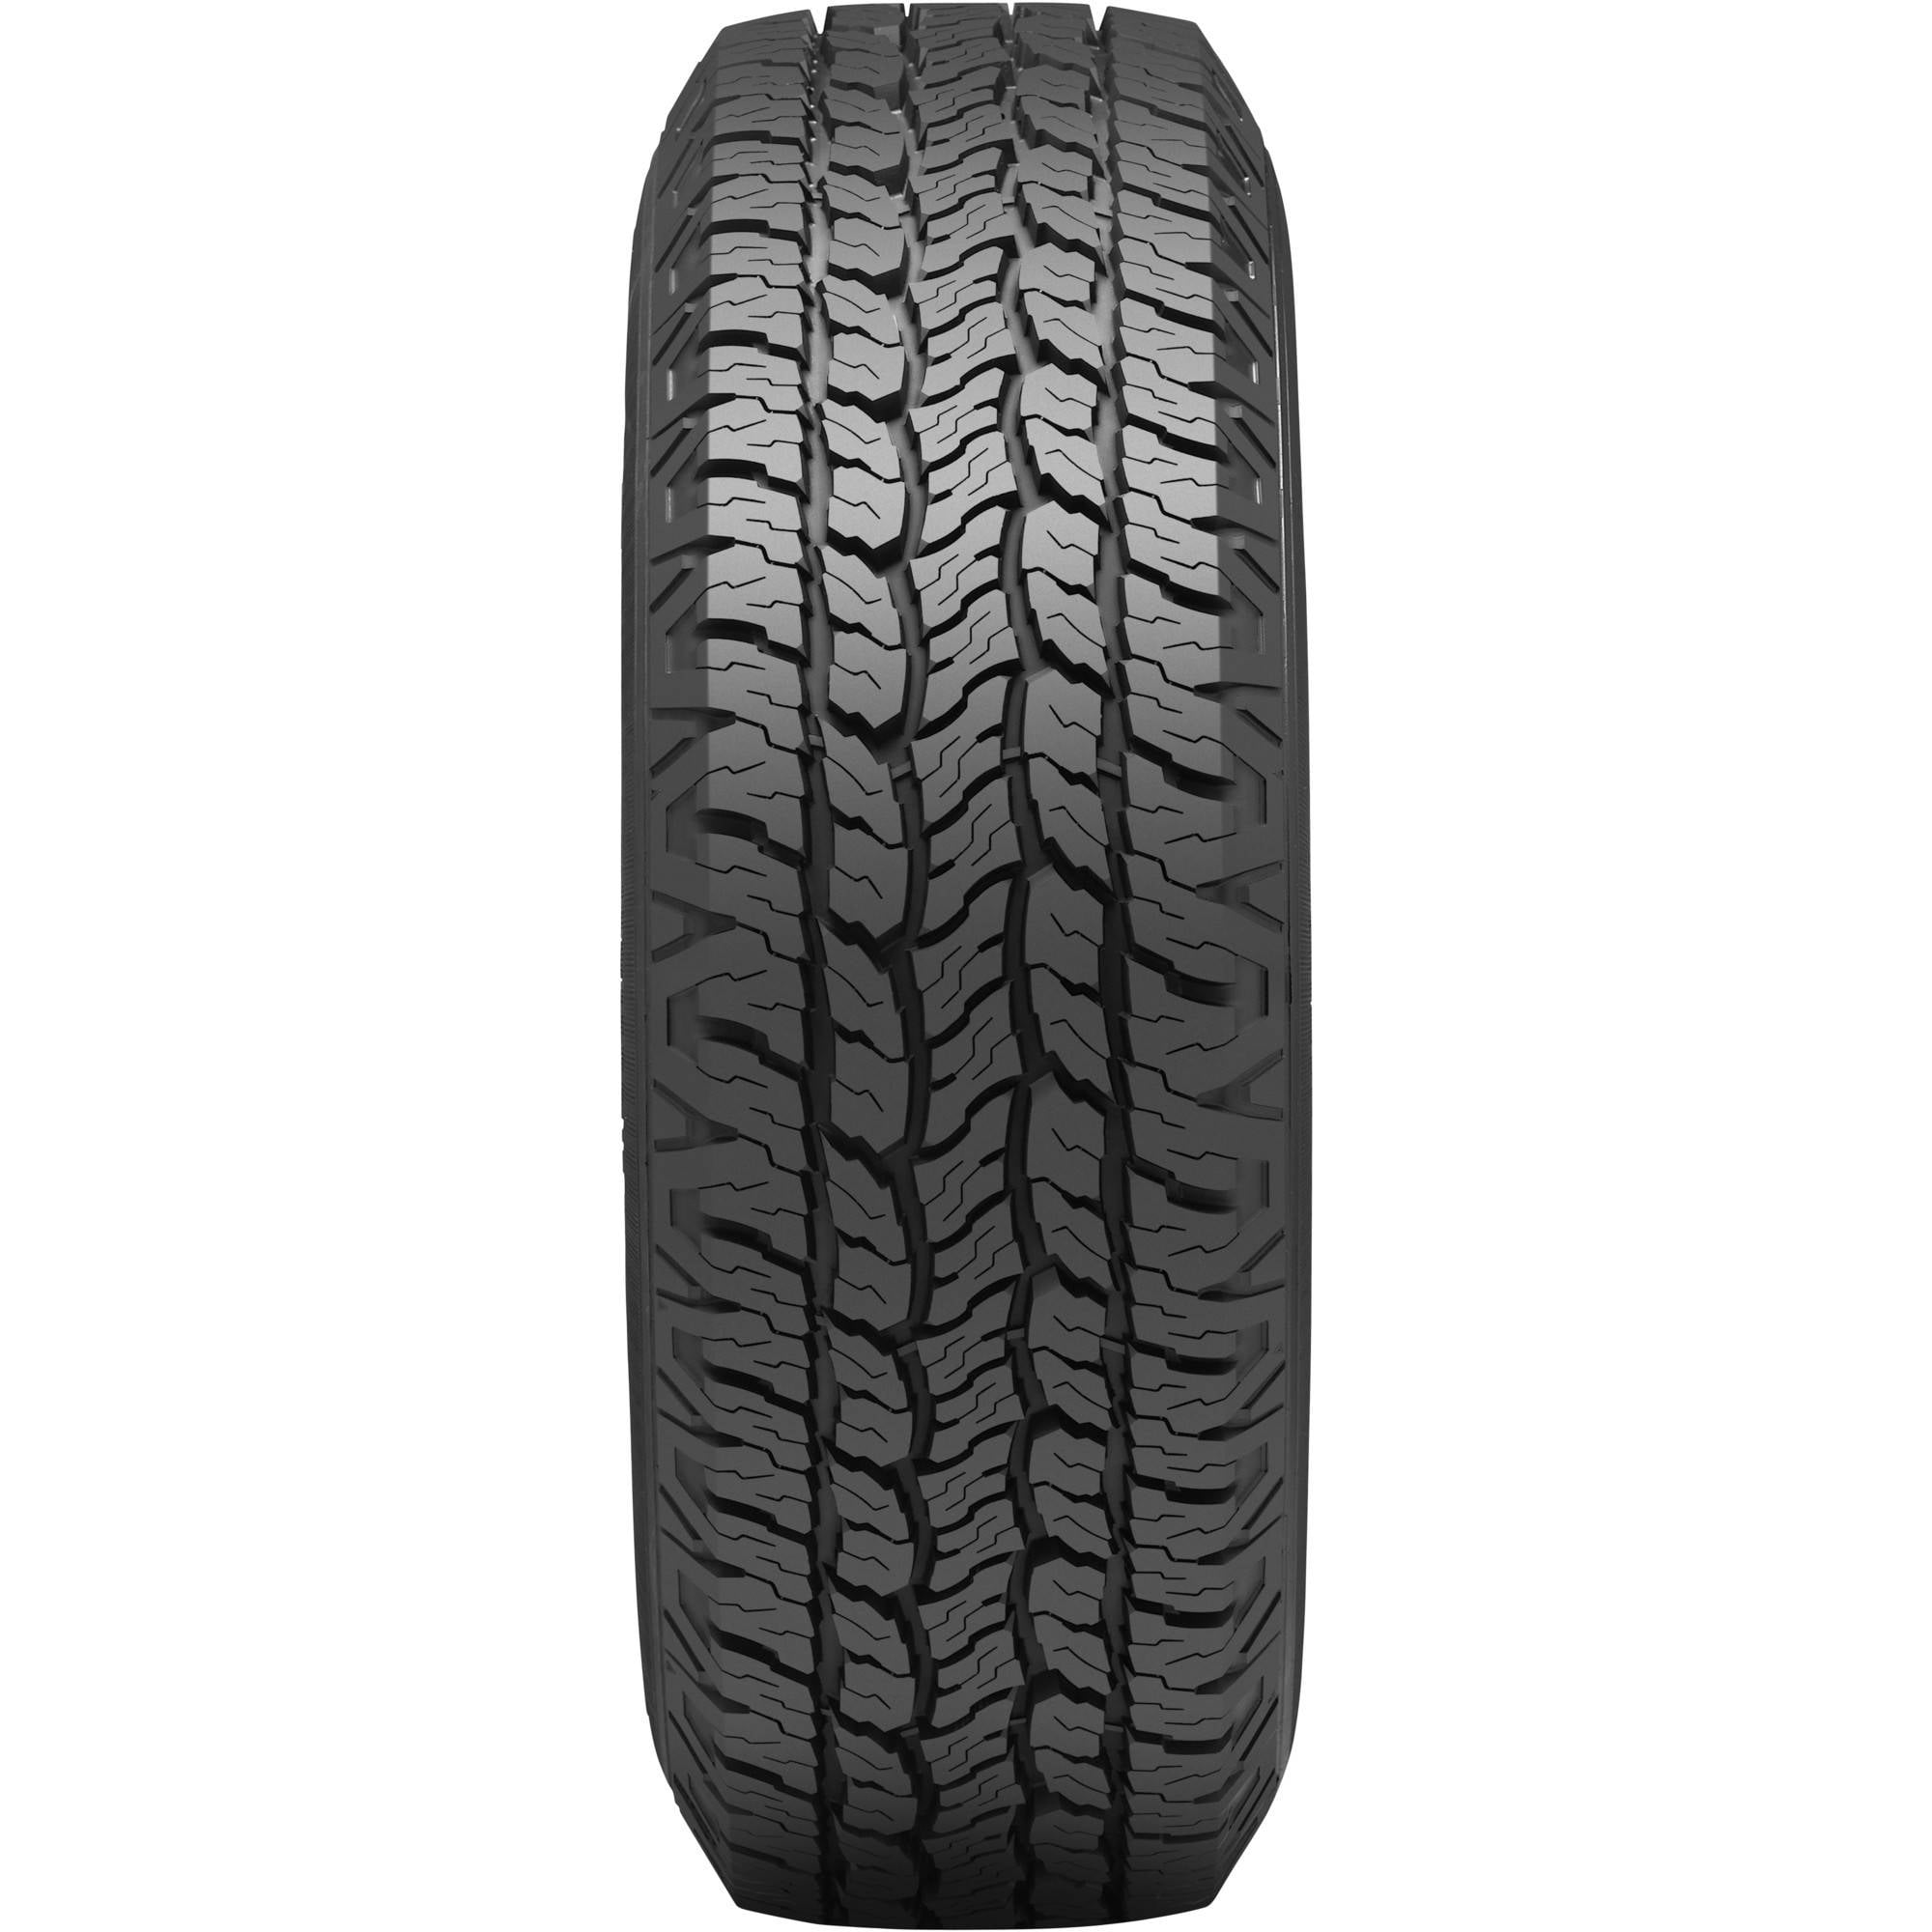 Goodyear Wrangler Trailmark LT245/75R16 120R All-Season Tire 